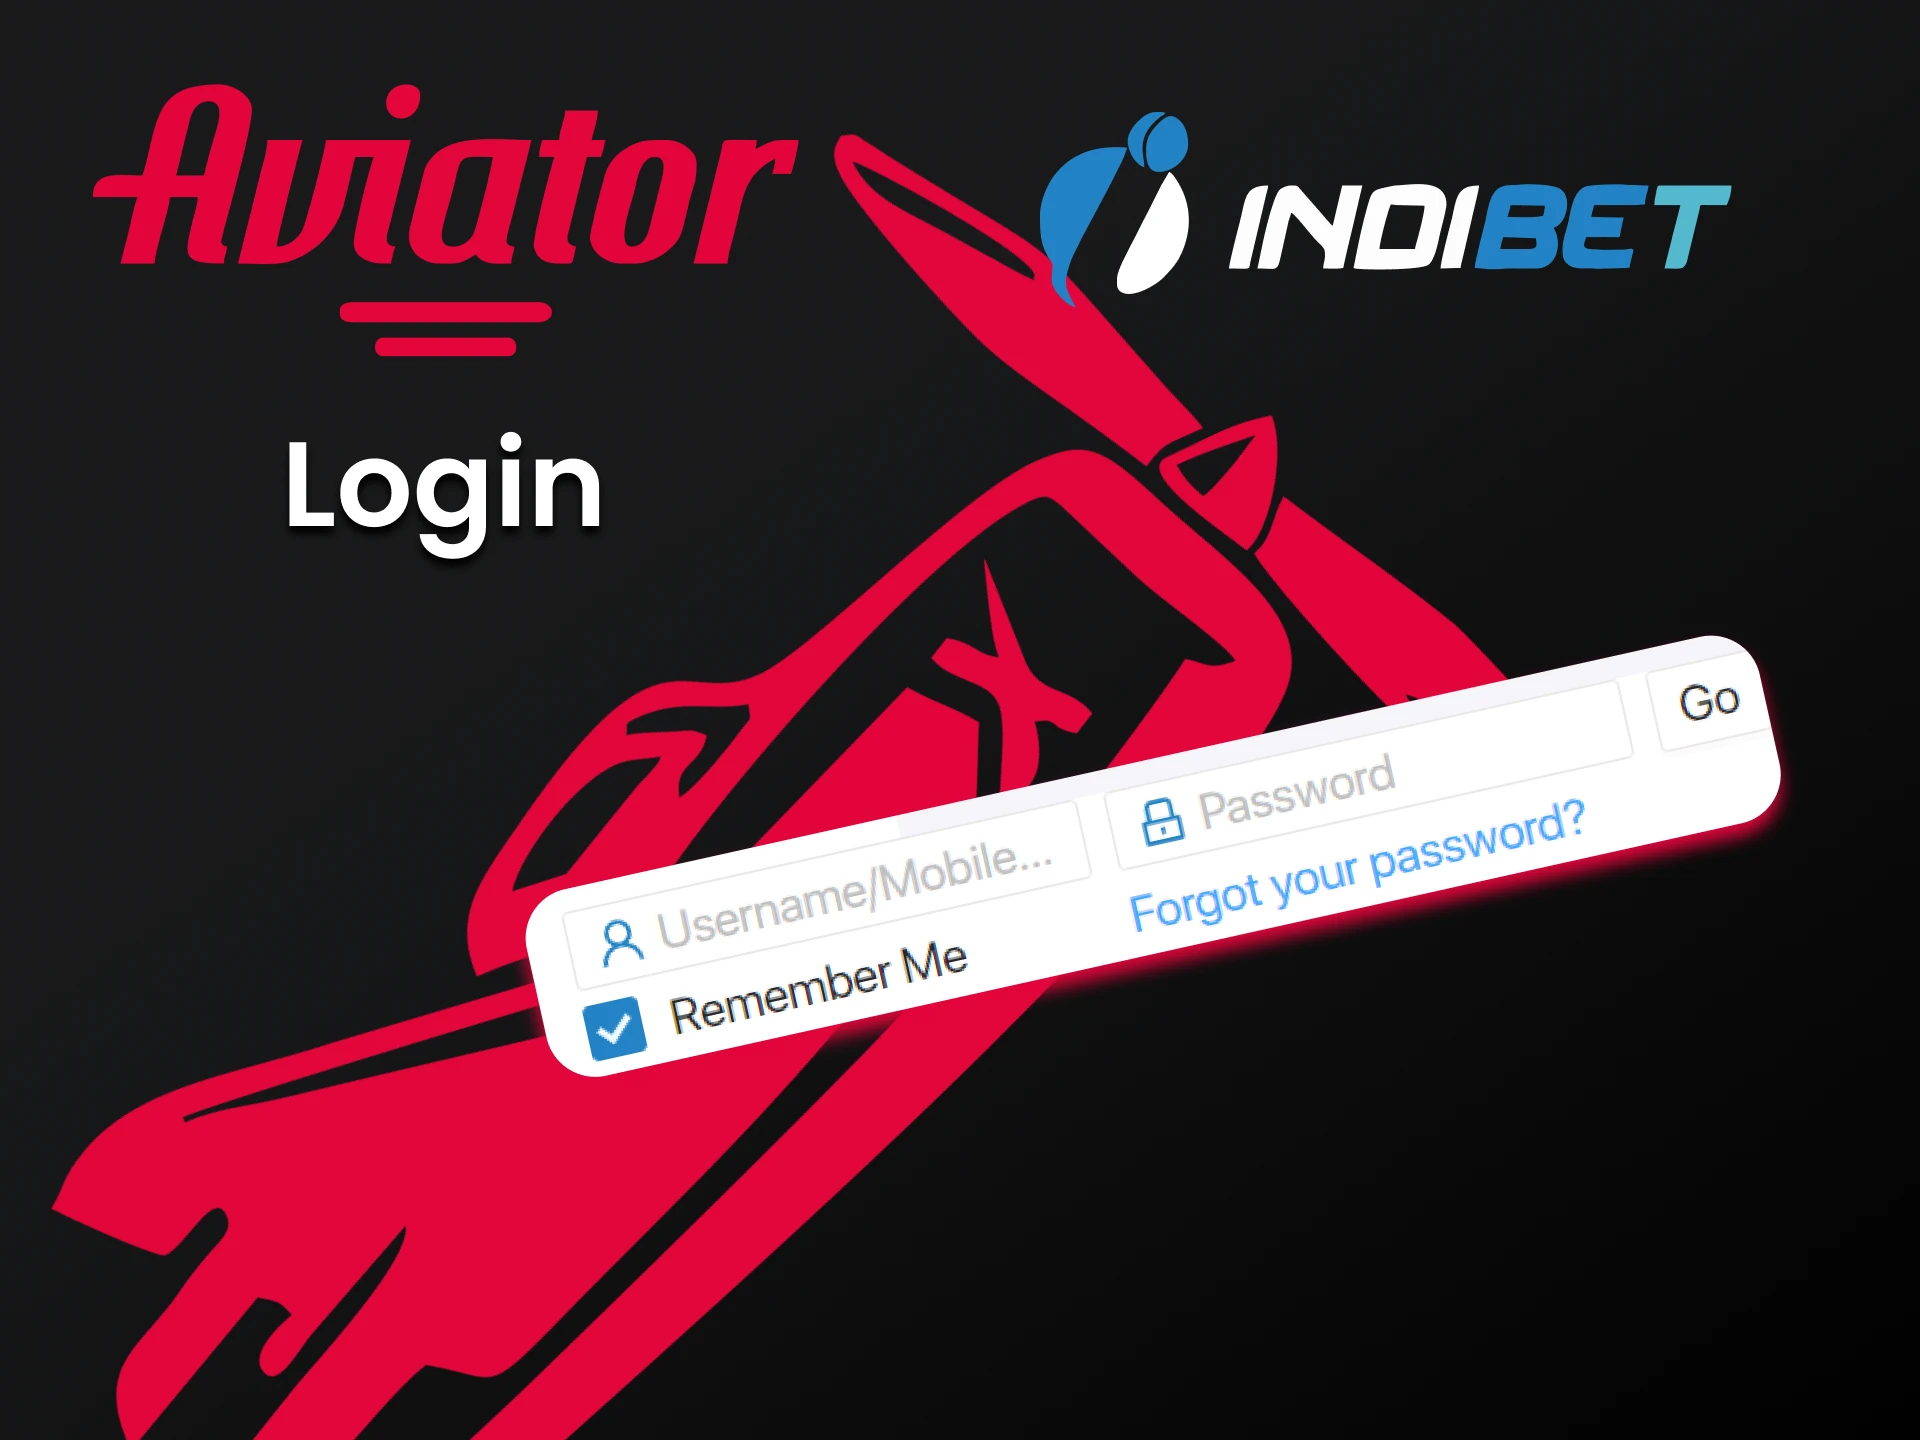 Login to your Indibet account to play Aviator.